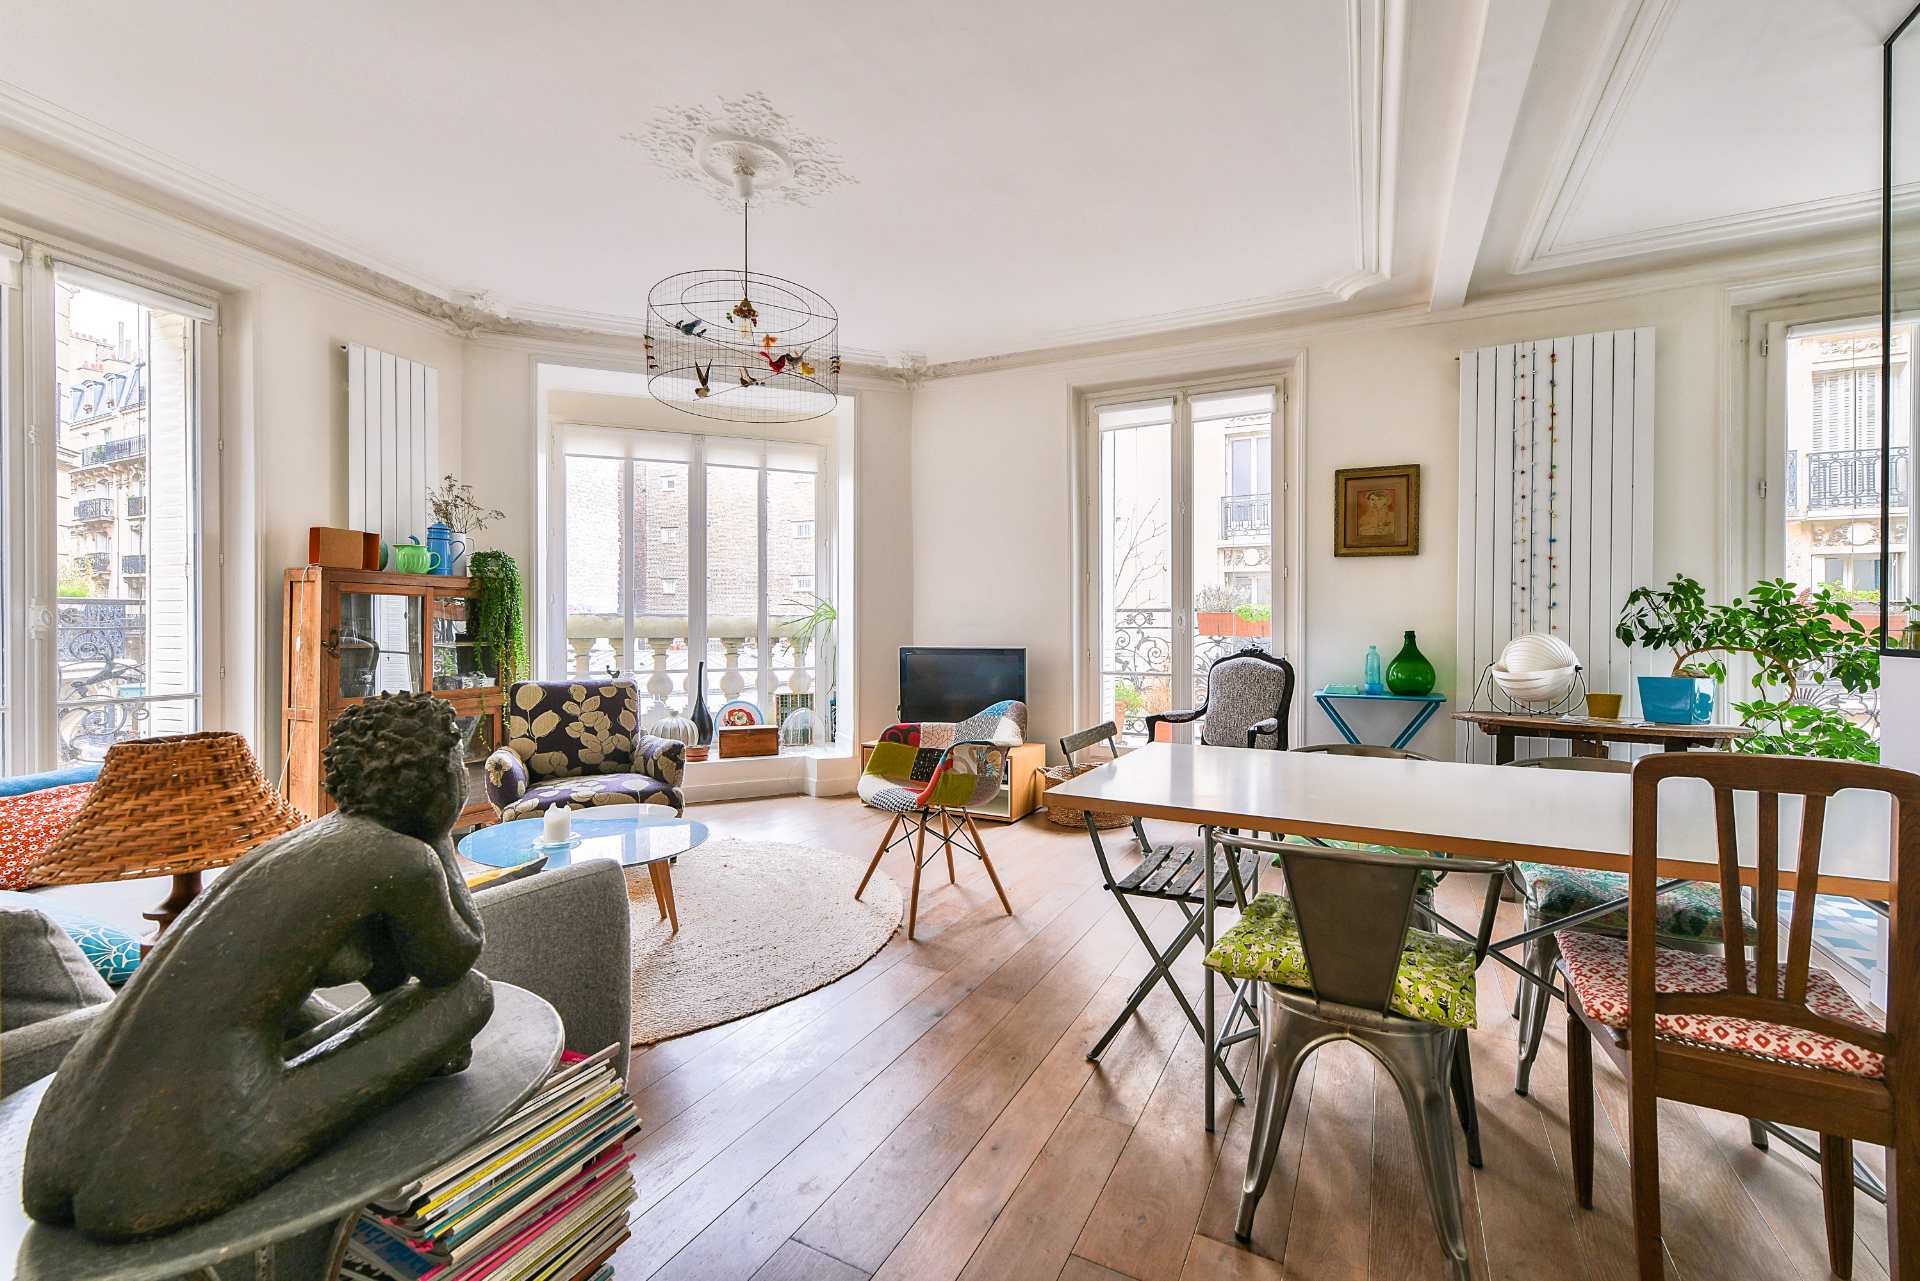 3 -room apartment of 77m2 – Damrémont sector – Paris XVIII 1